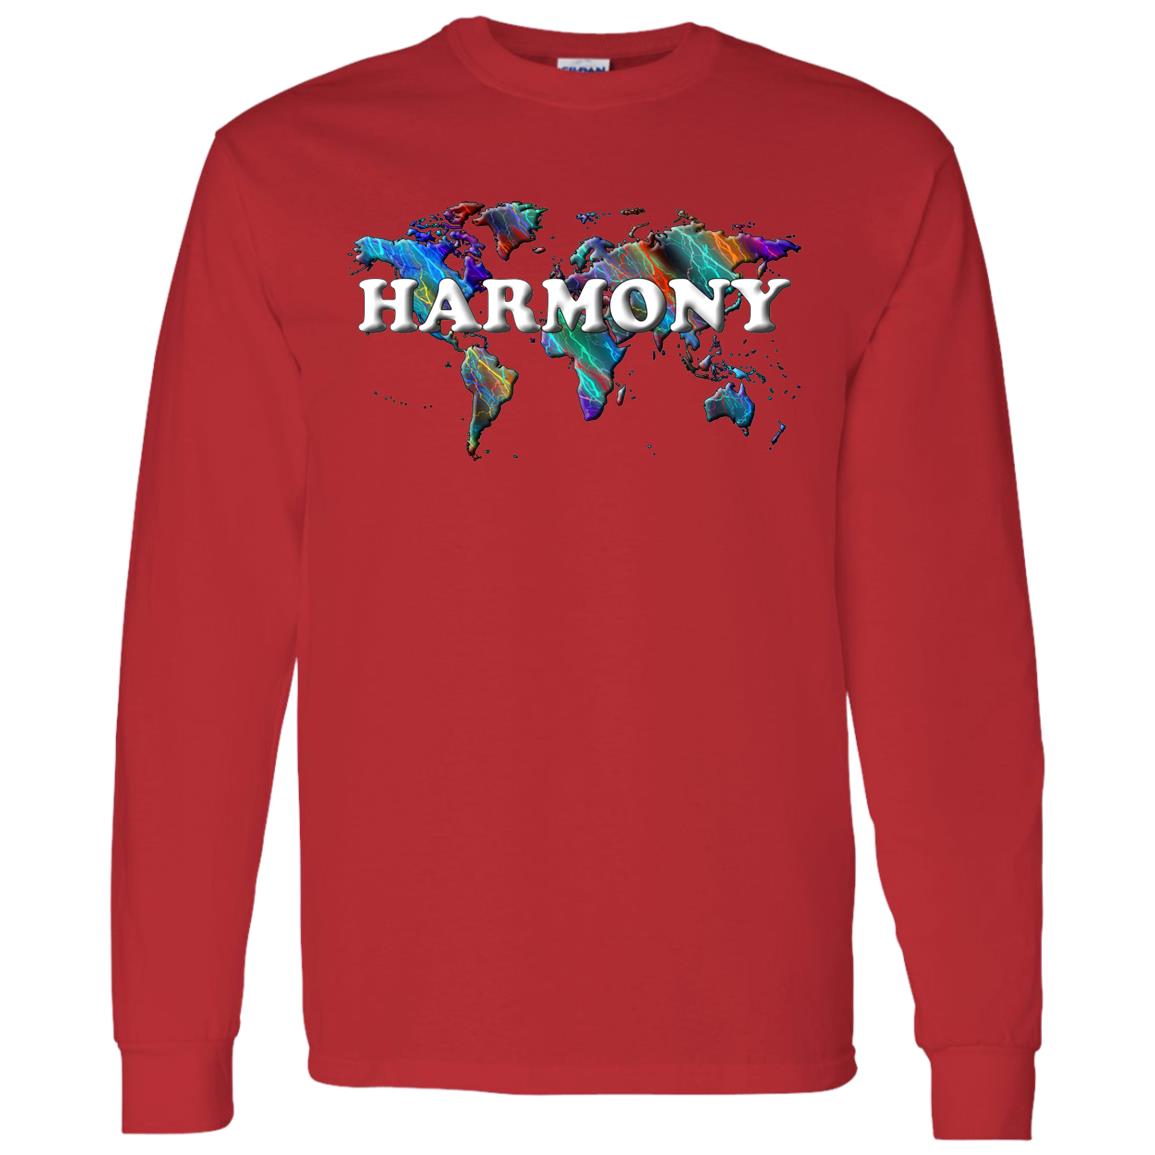 Harmony LS T-Shirt